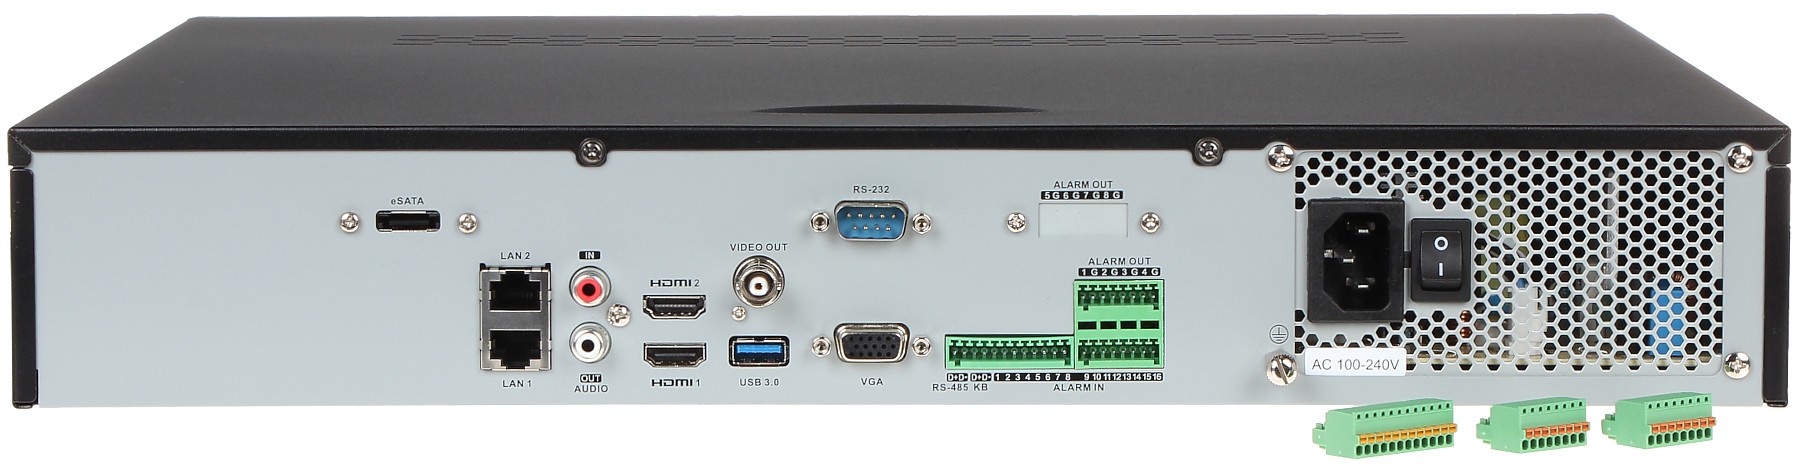 Регистратор линия. DS-7716ni-i4(b). DS-7732nxi-i4. Hikvision DS-7732nxi-i4/s(c). 32-Канальный IP-видеорегистратор Hikvision DS-7732ni-k4/16p.